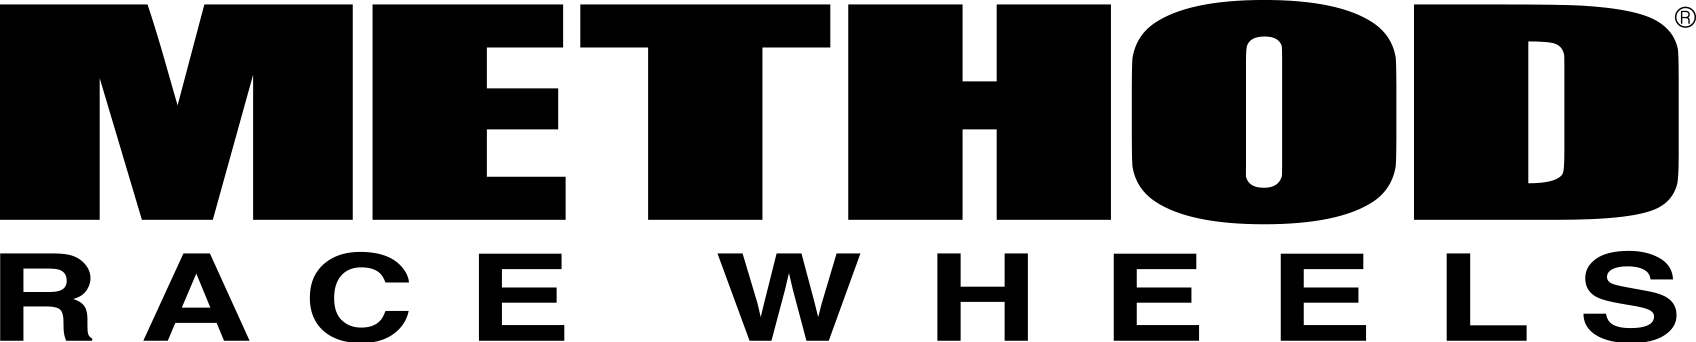 MRW_Method-Race-Wheels-solo-R-black-logo.png